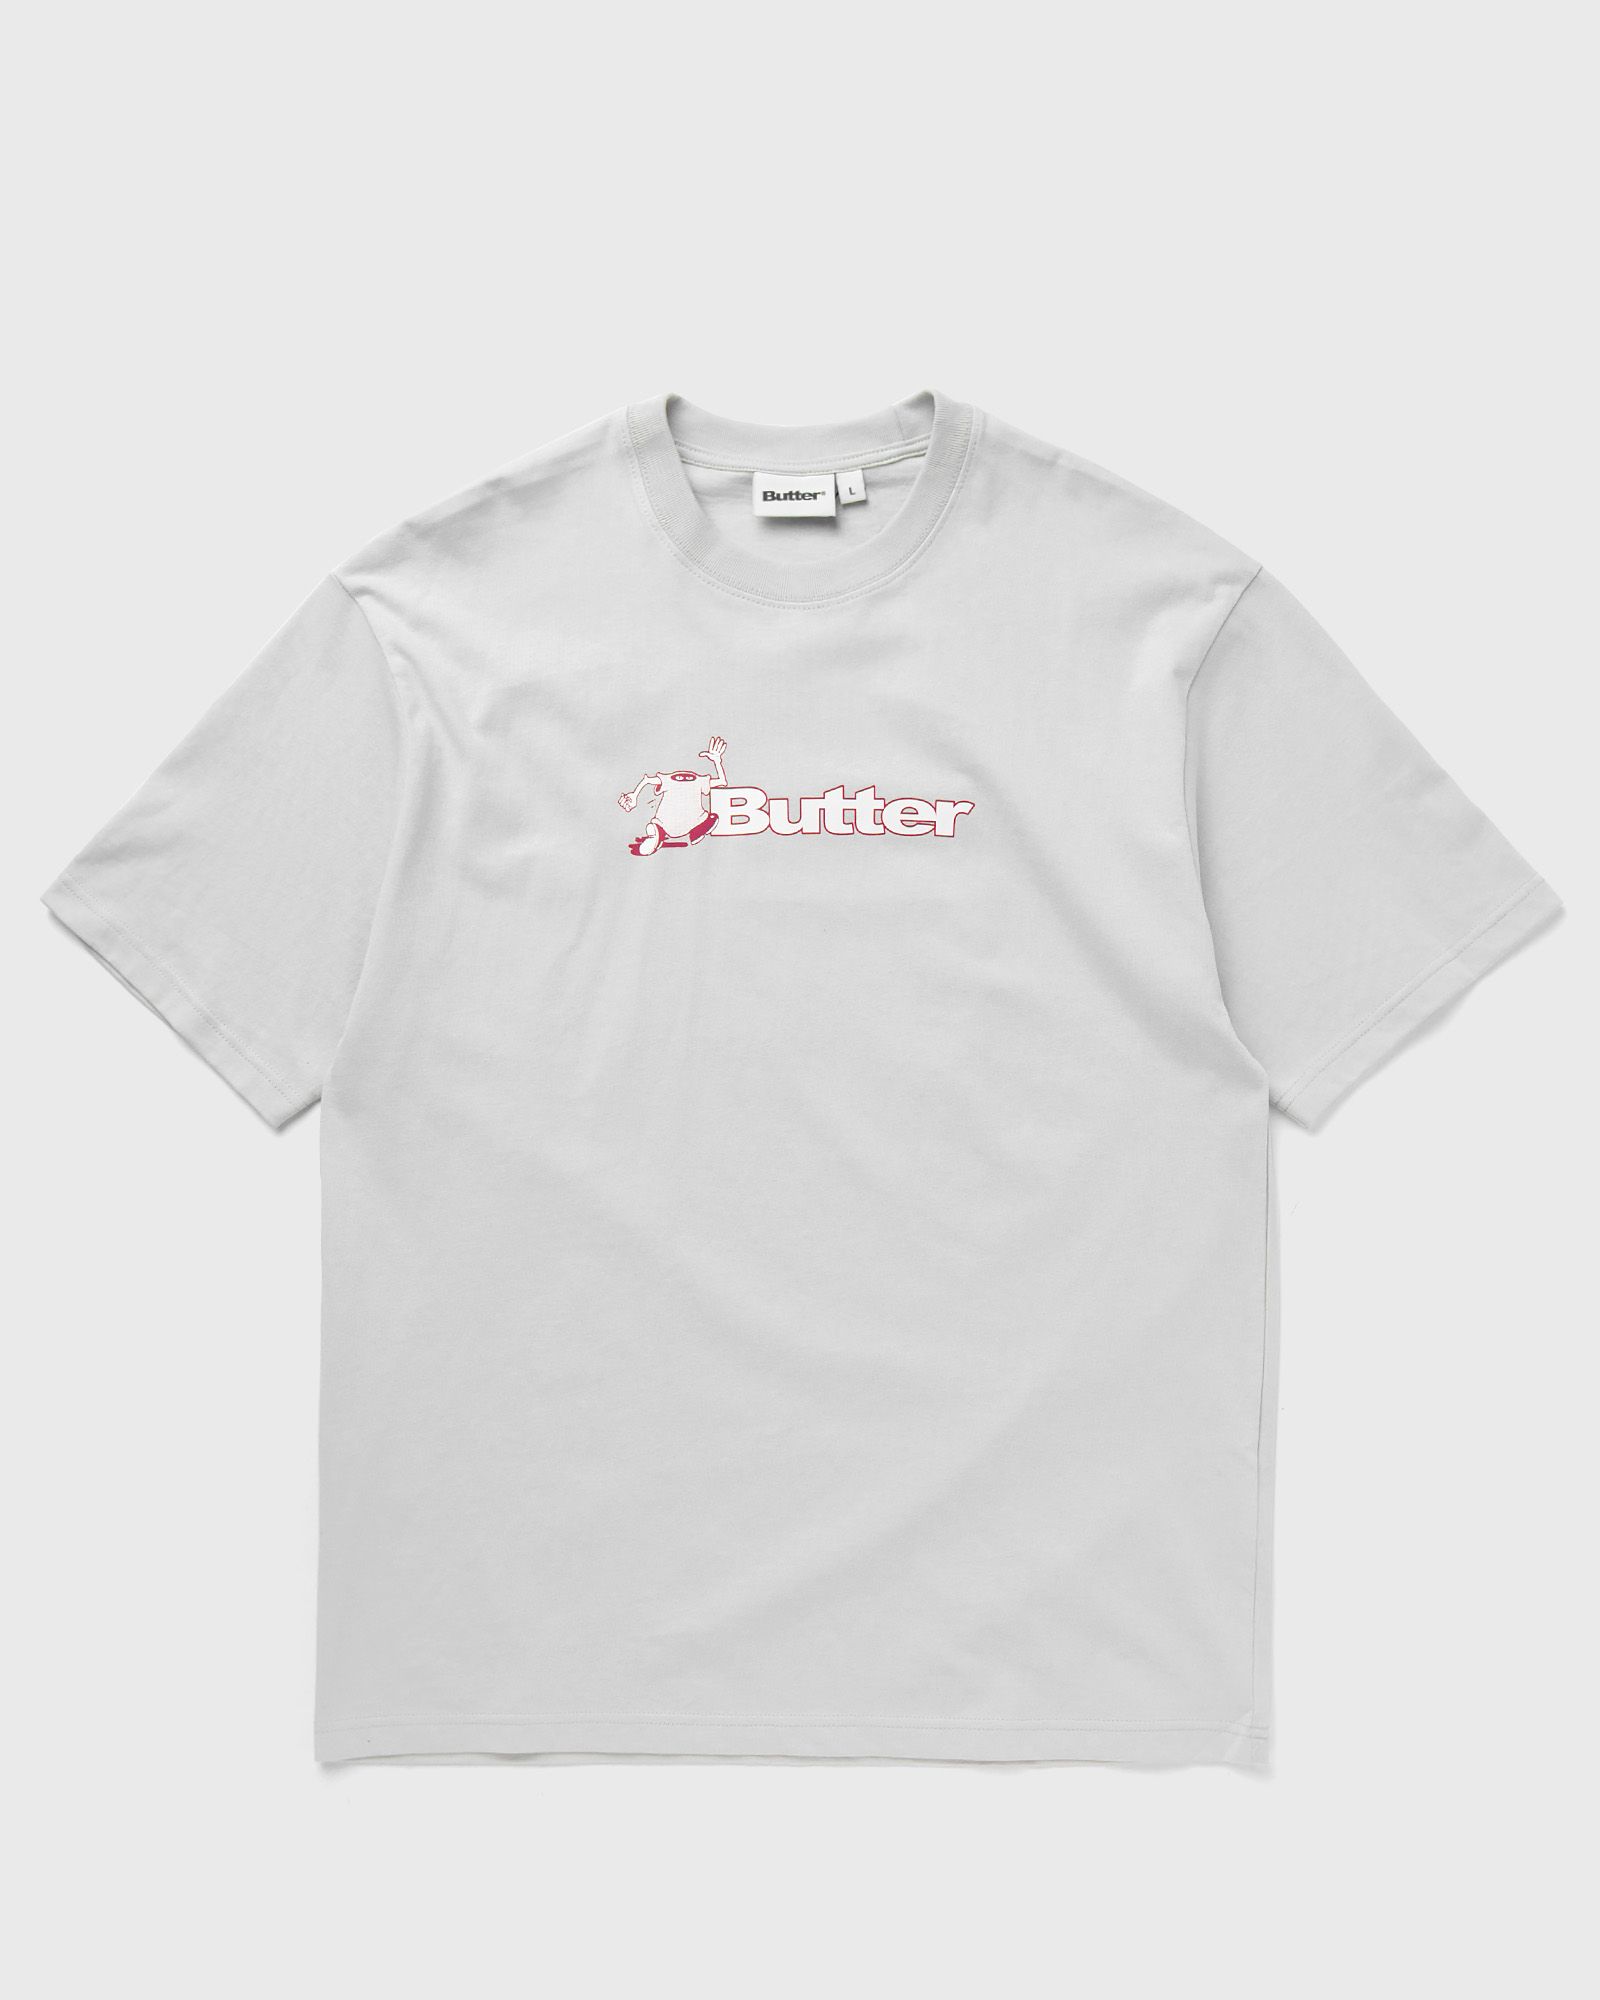 Butter Goods - t-shirt logo tee men shortsleeves grey in größe:m